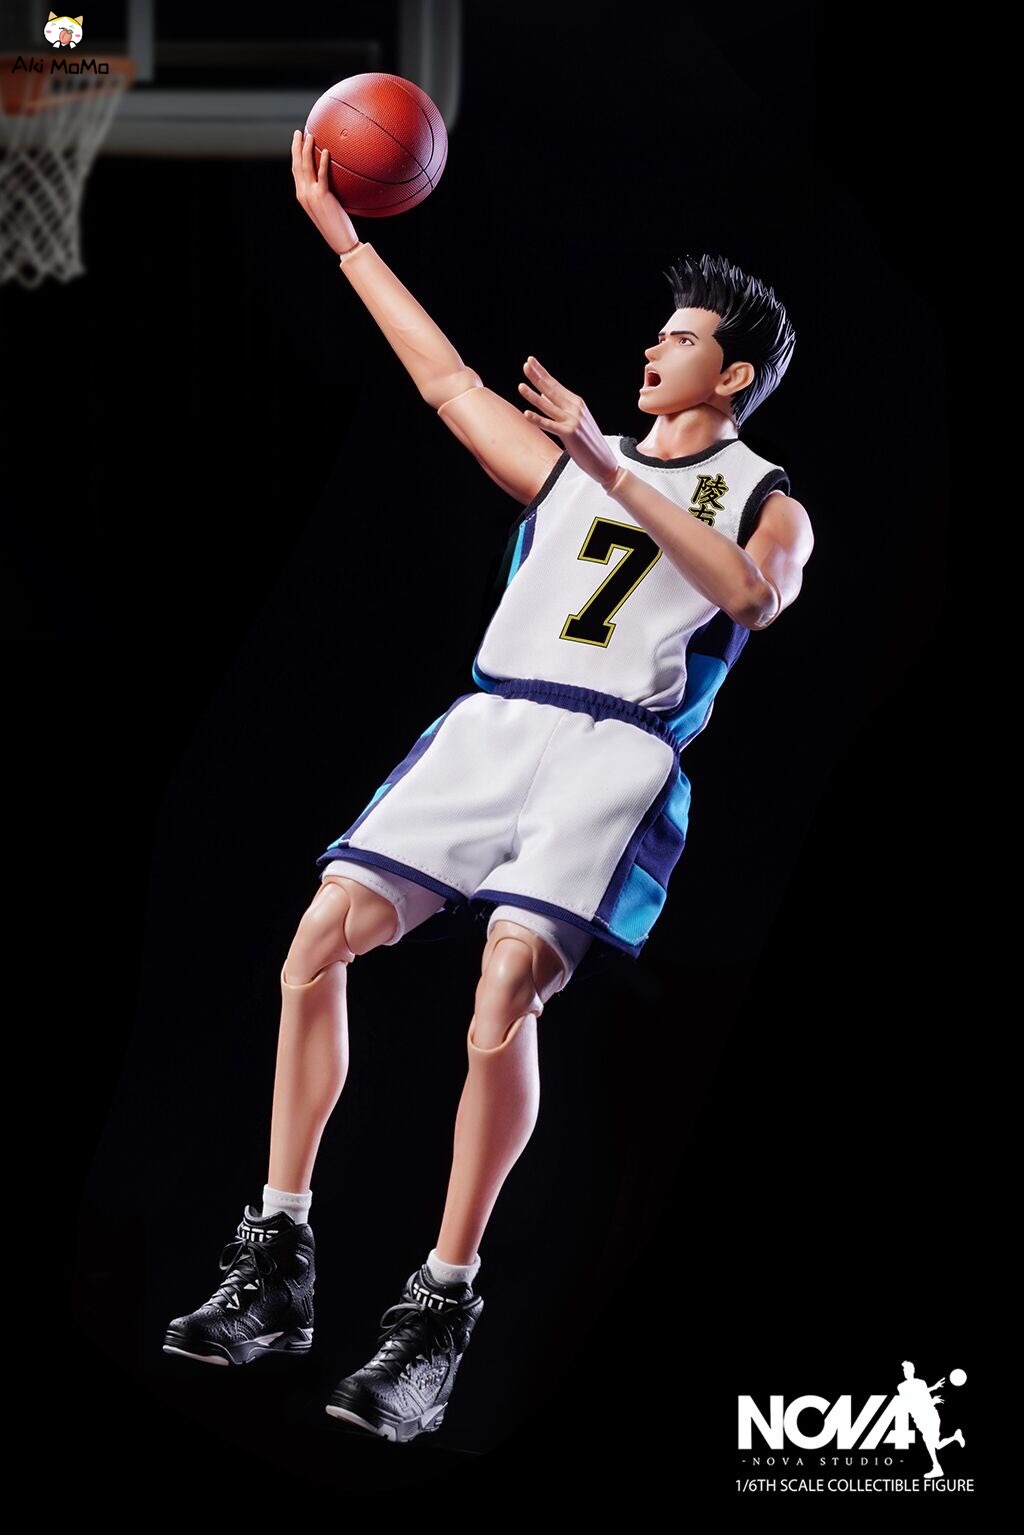 Details about   NOVA Studio 1/6 AKIRA SENDOH Basketball player Hedgehog Head Action Figure Model 